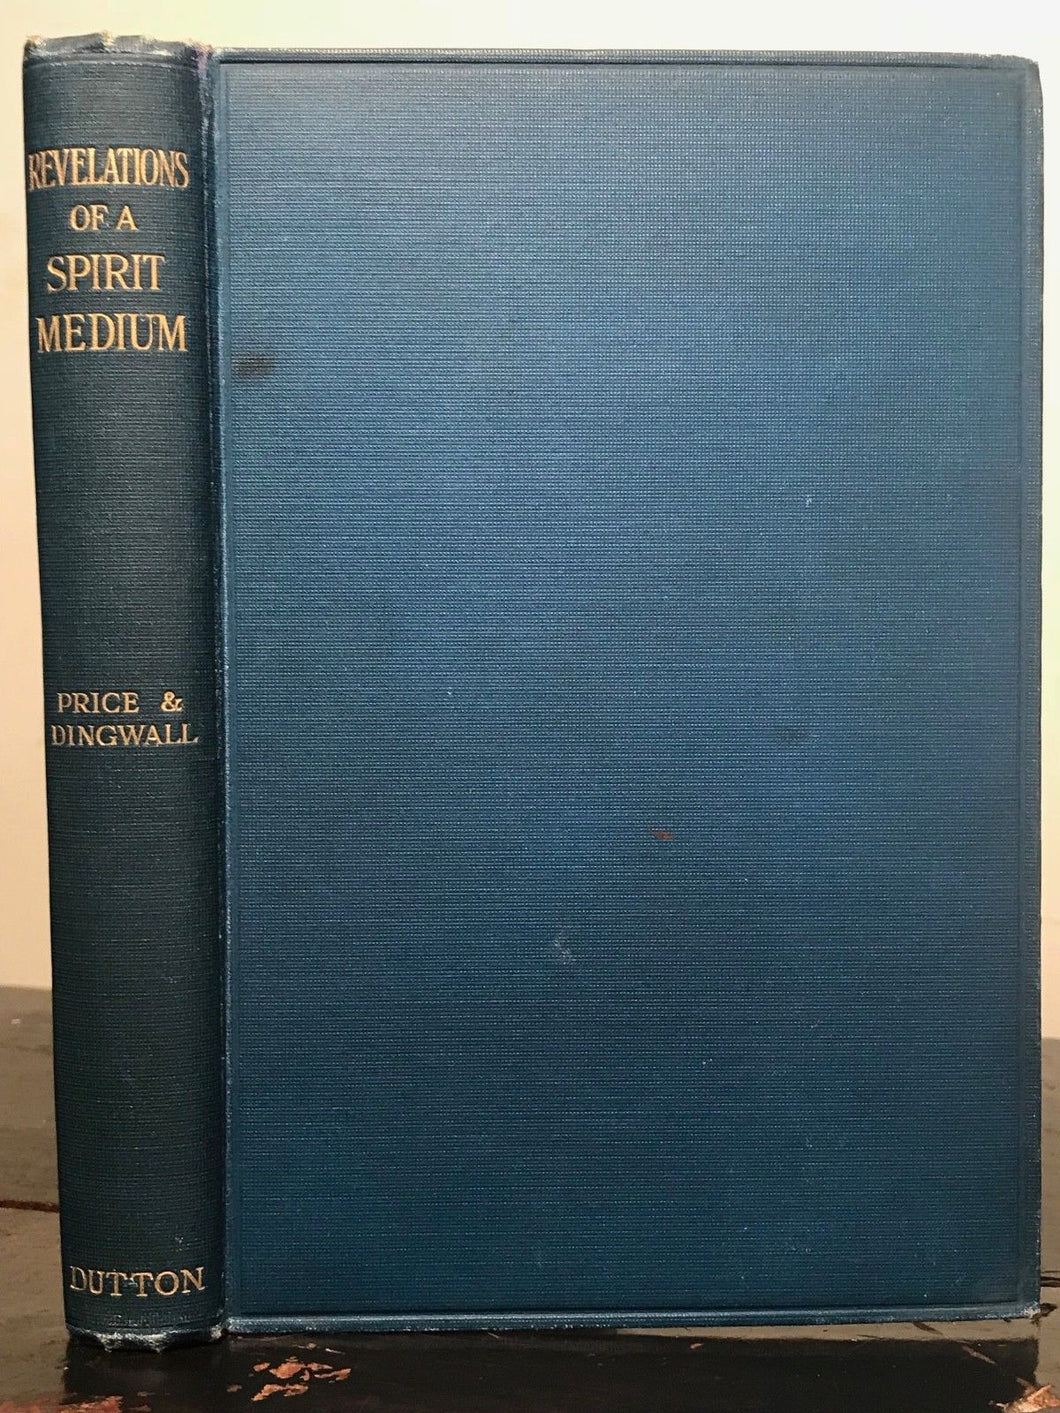 REVELATIONS OF A SPIRIT MEDIUM, HARRY PRICE 1st/1st 1922 - GHOSTS PSYCHIC MEDIUM